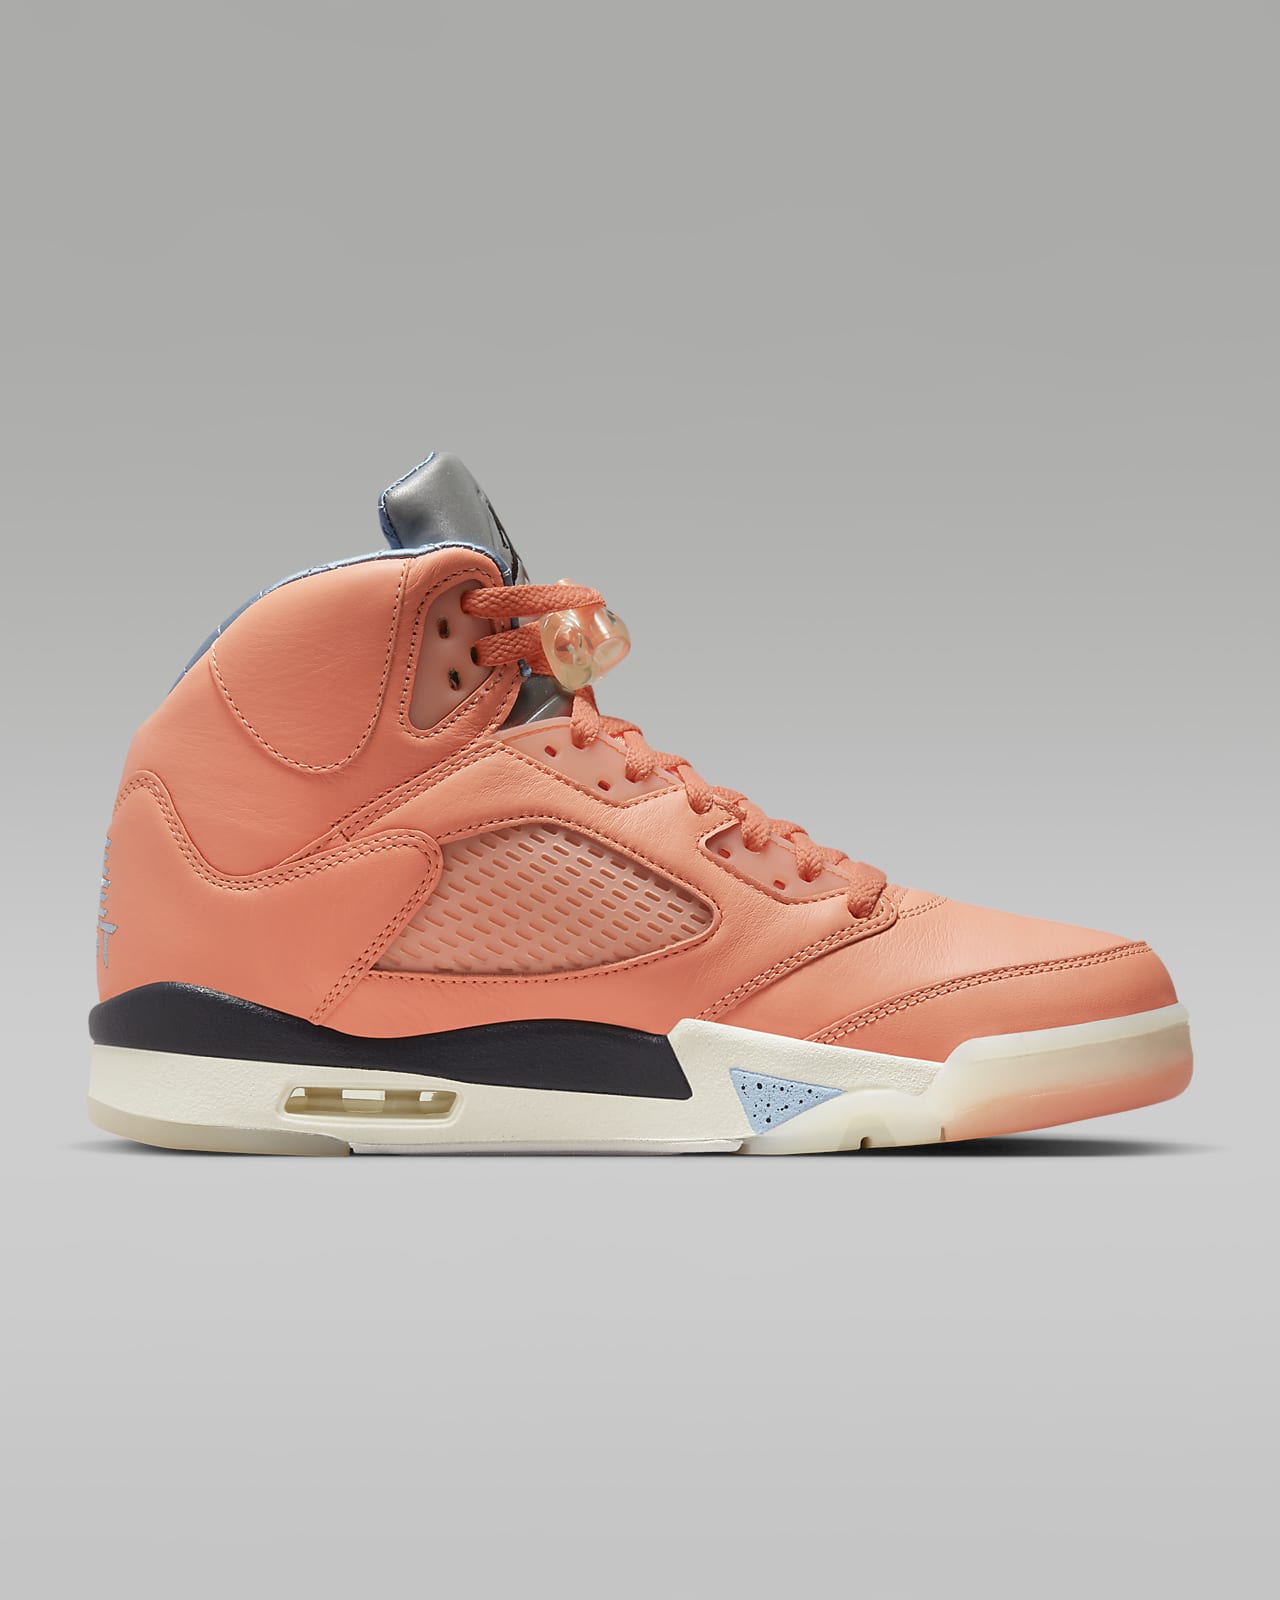 Nike Air Jordan 5 Retro x DJ Khaled Crimson Bliss - Men's